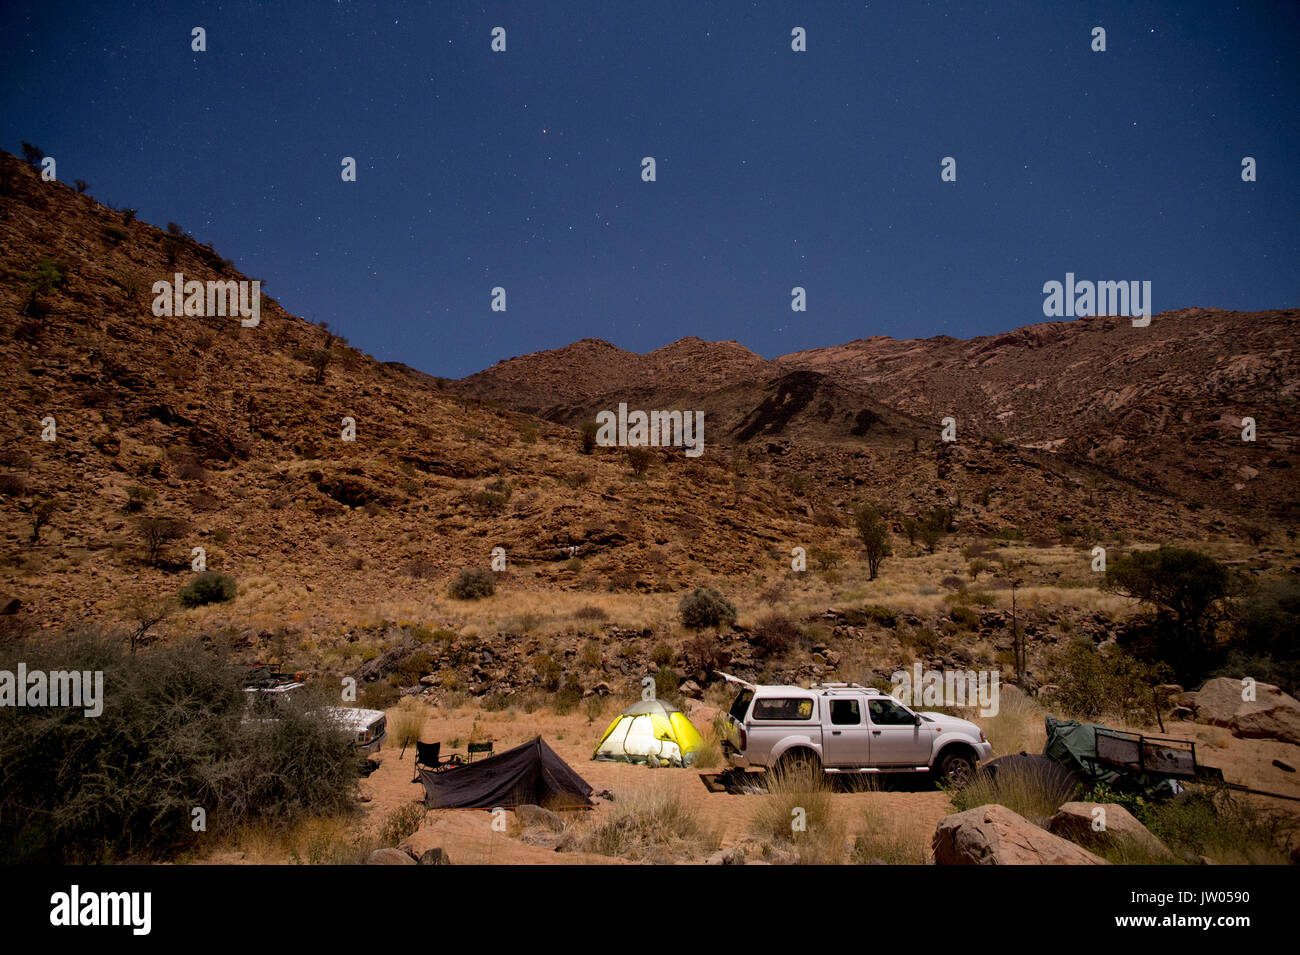 Tourist camp with tents and 4x4 car at night, Brandberg mountain, Damaraland, Namibia Stock Photo